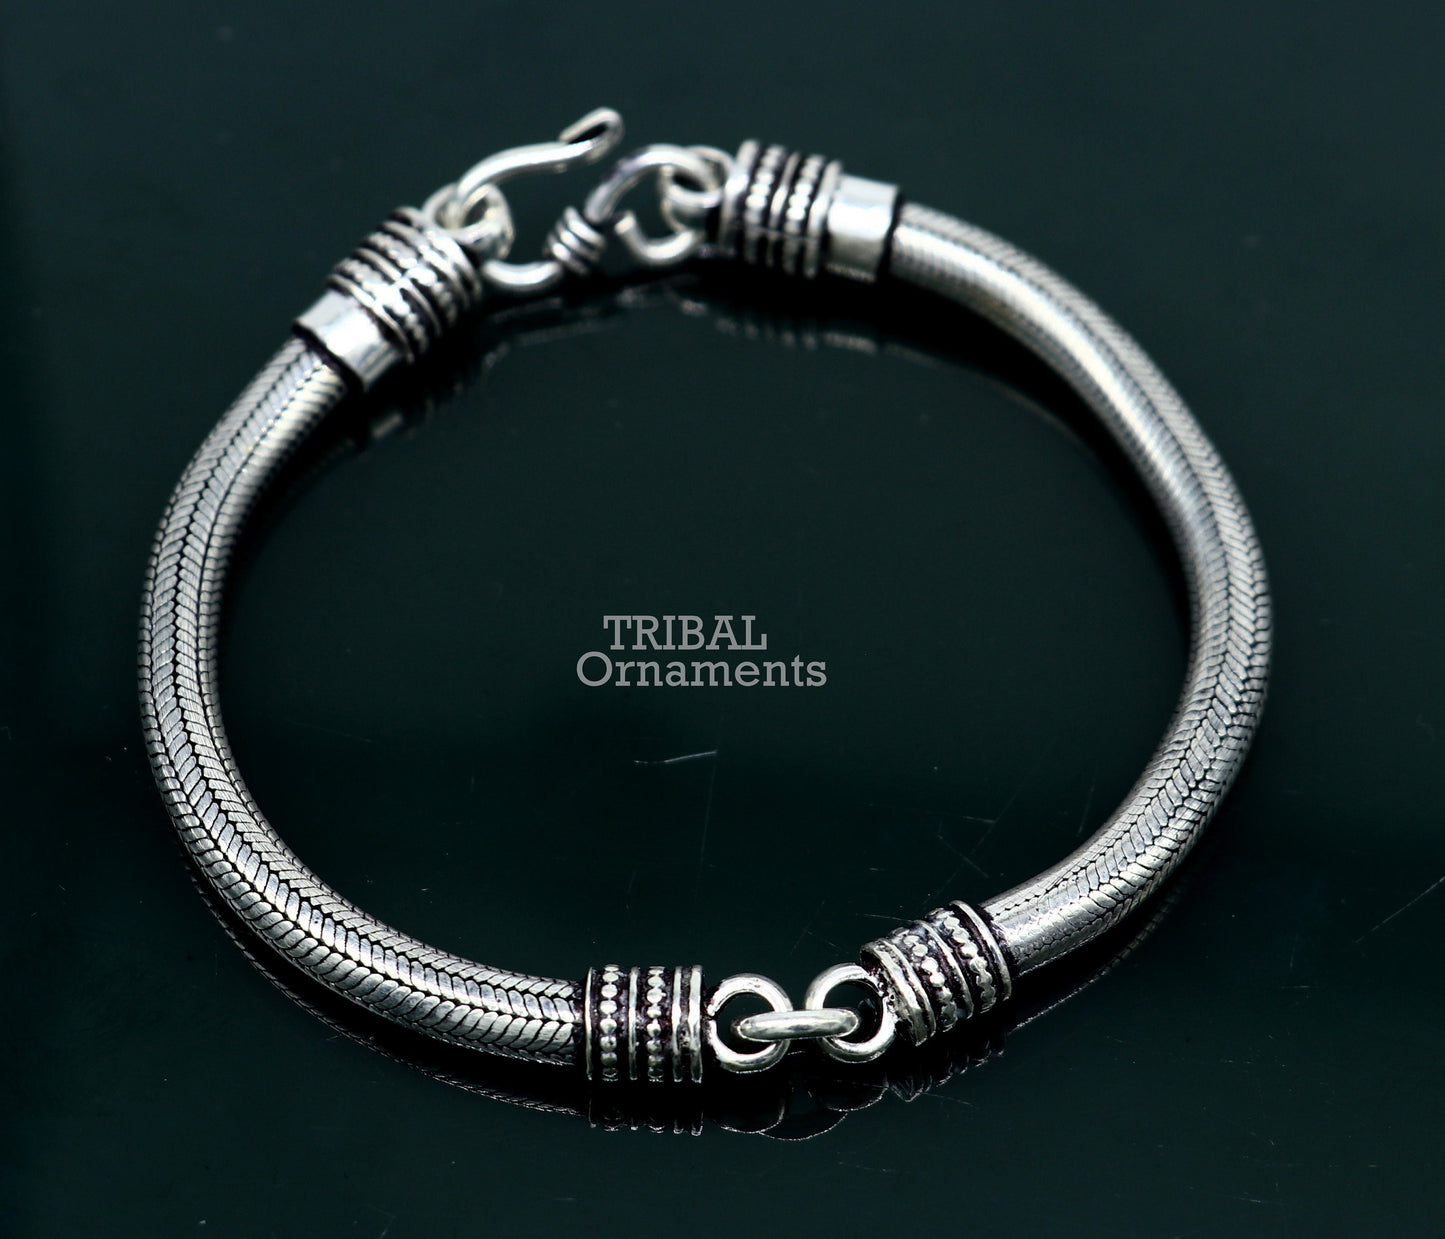 5MM Solid 925 sterling silver handmade amazing snake chain flexible unisex bracelet jewelry elegant custom wrist belt bracelet india sbr374 - TRIBAL ORNAMENTS